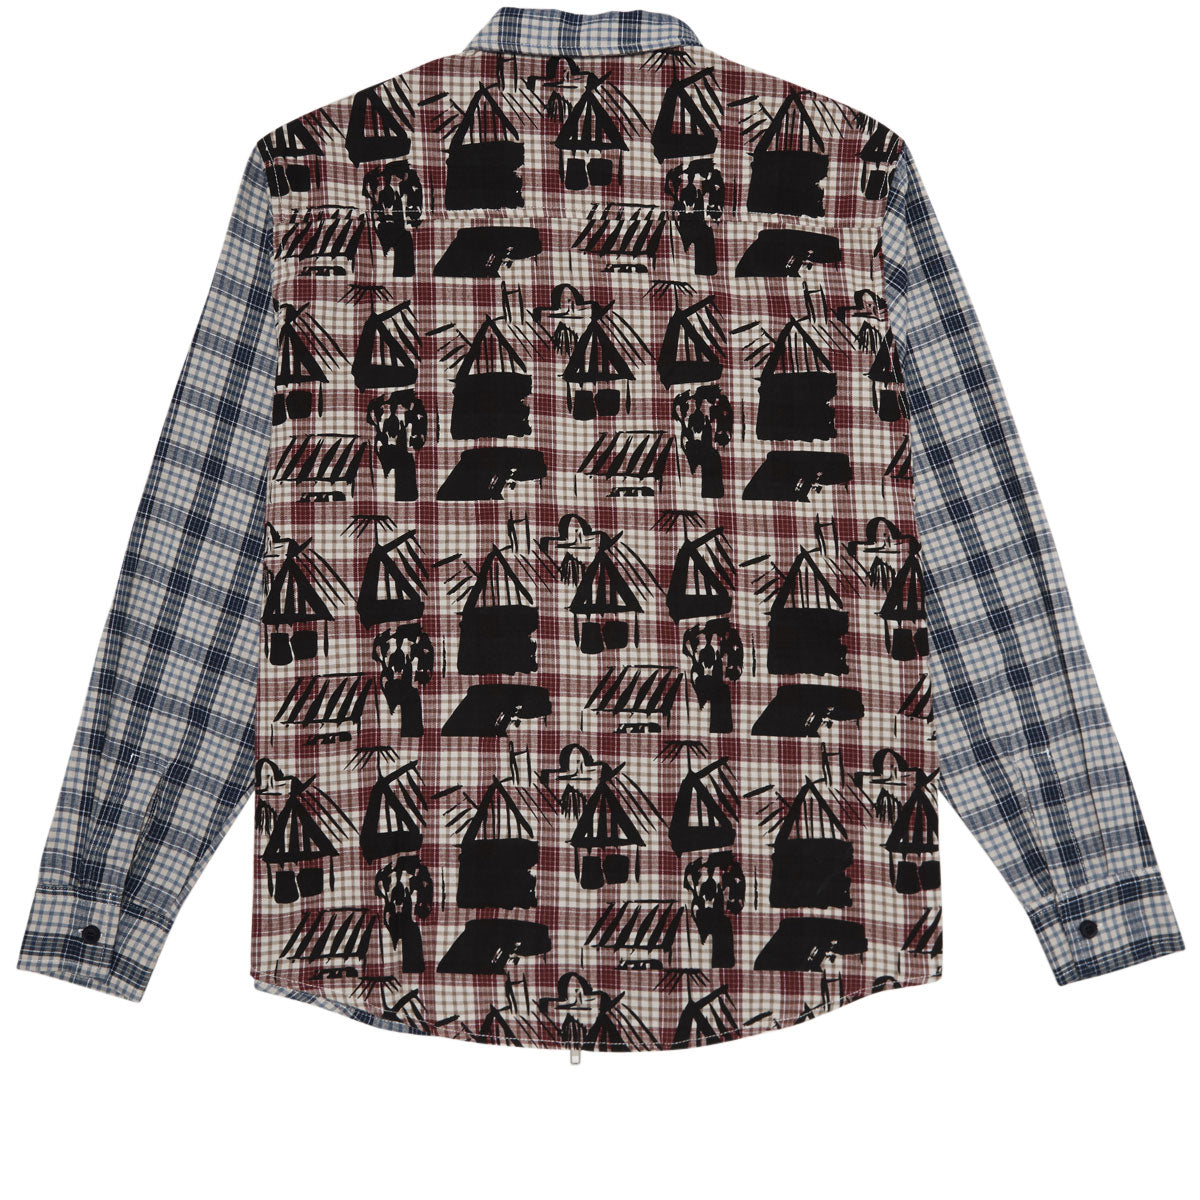 Hoddle Skyline Zip Up Flannel Shirt - Multi Plaid image 2